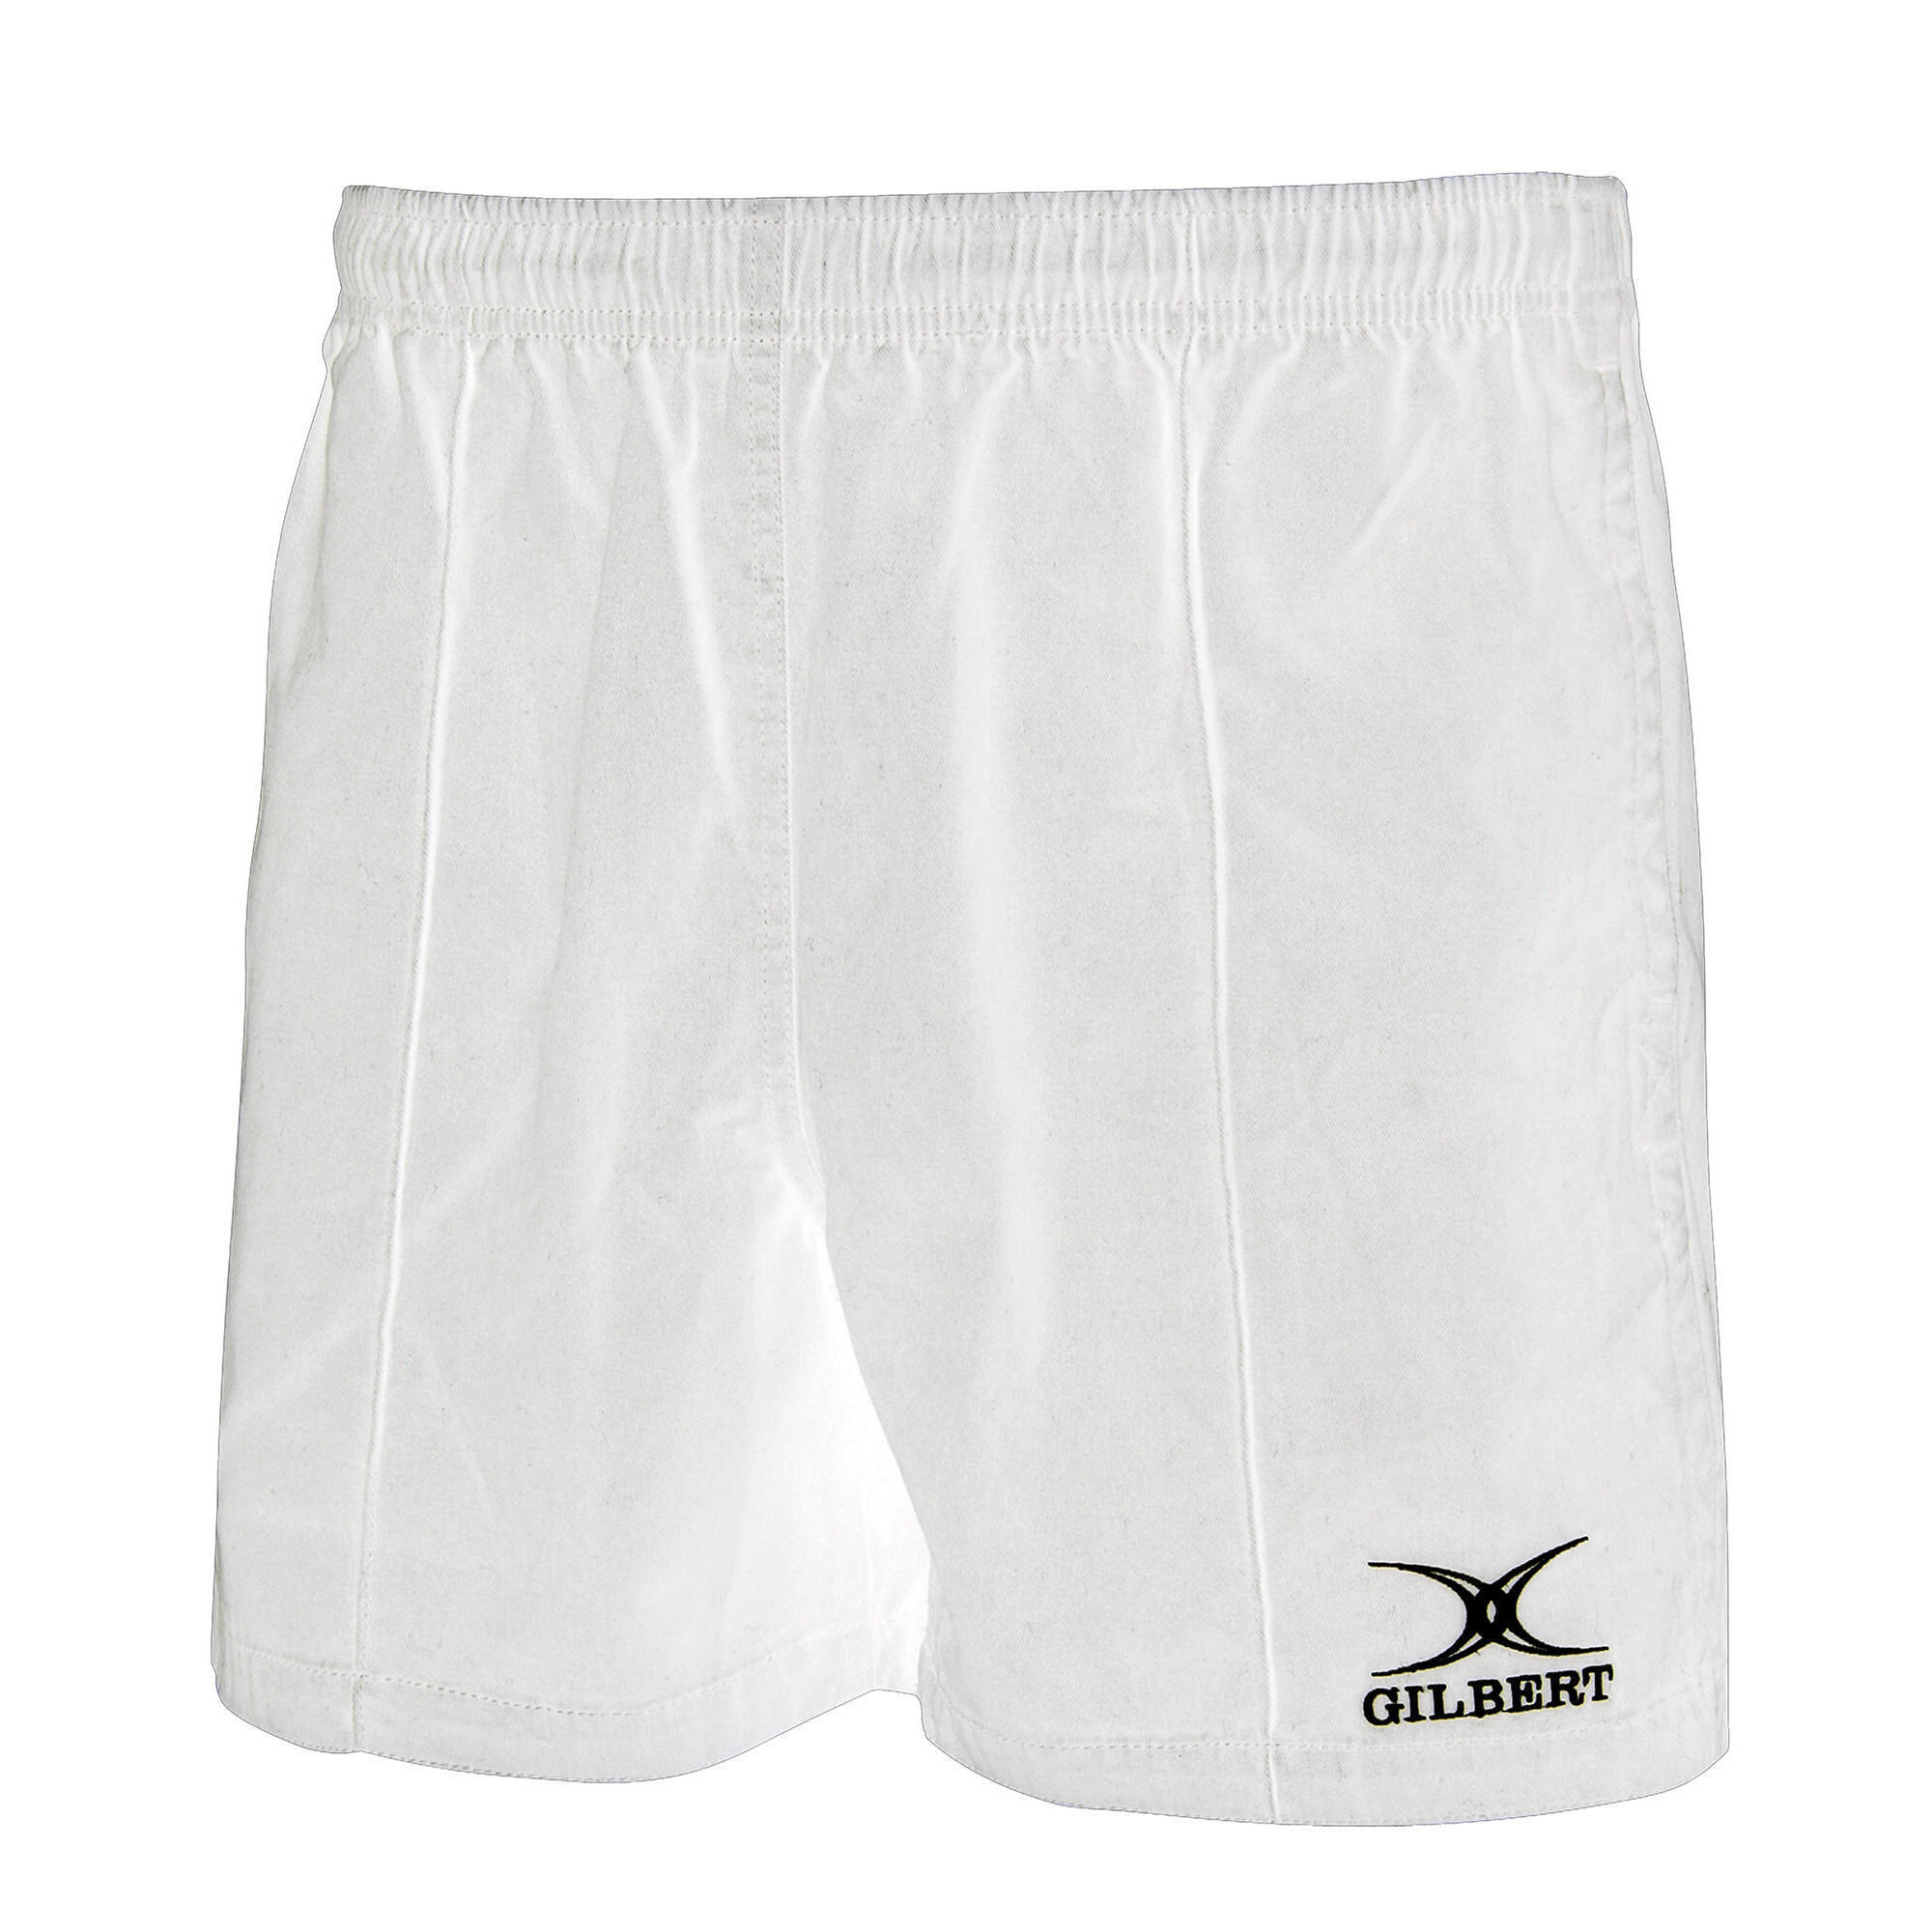 GILBERT Kiwi Pro Shorts, White